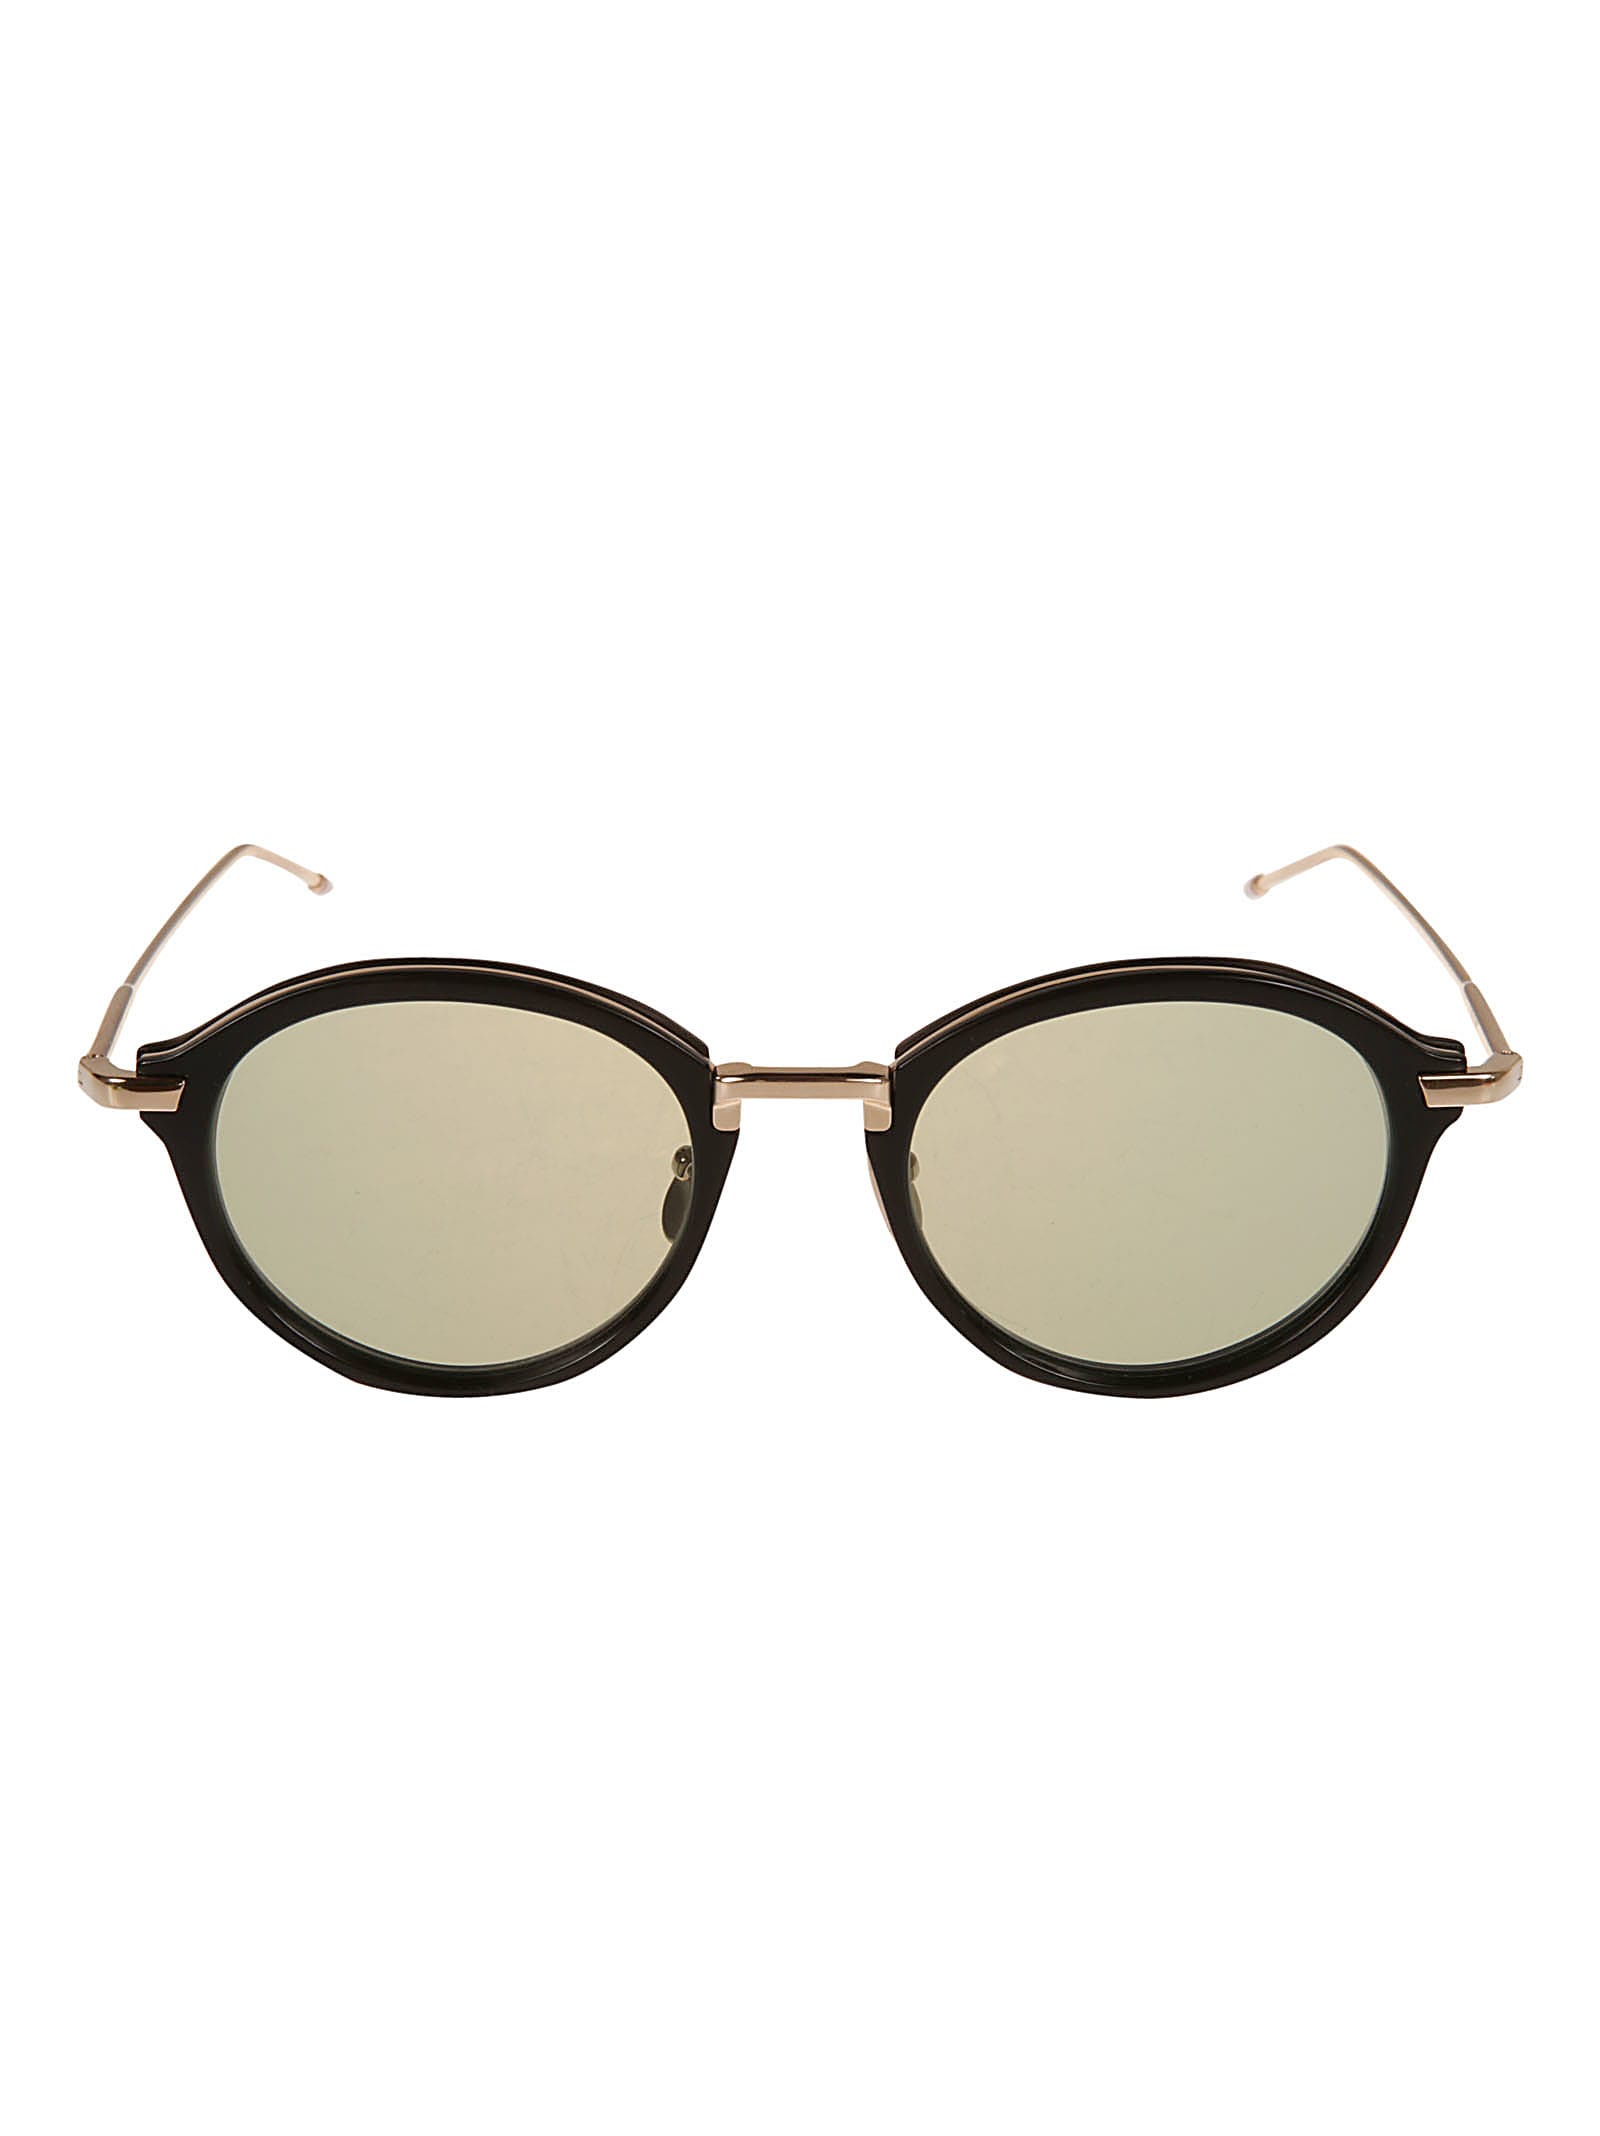 Thom Browne Classic Round Frame Sunglasses